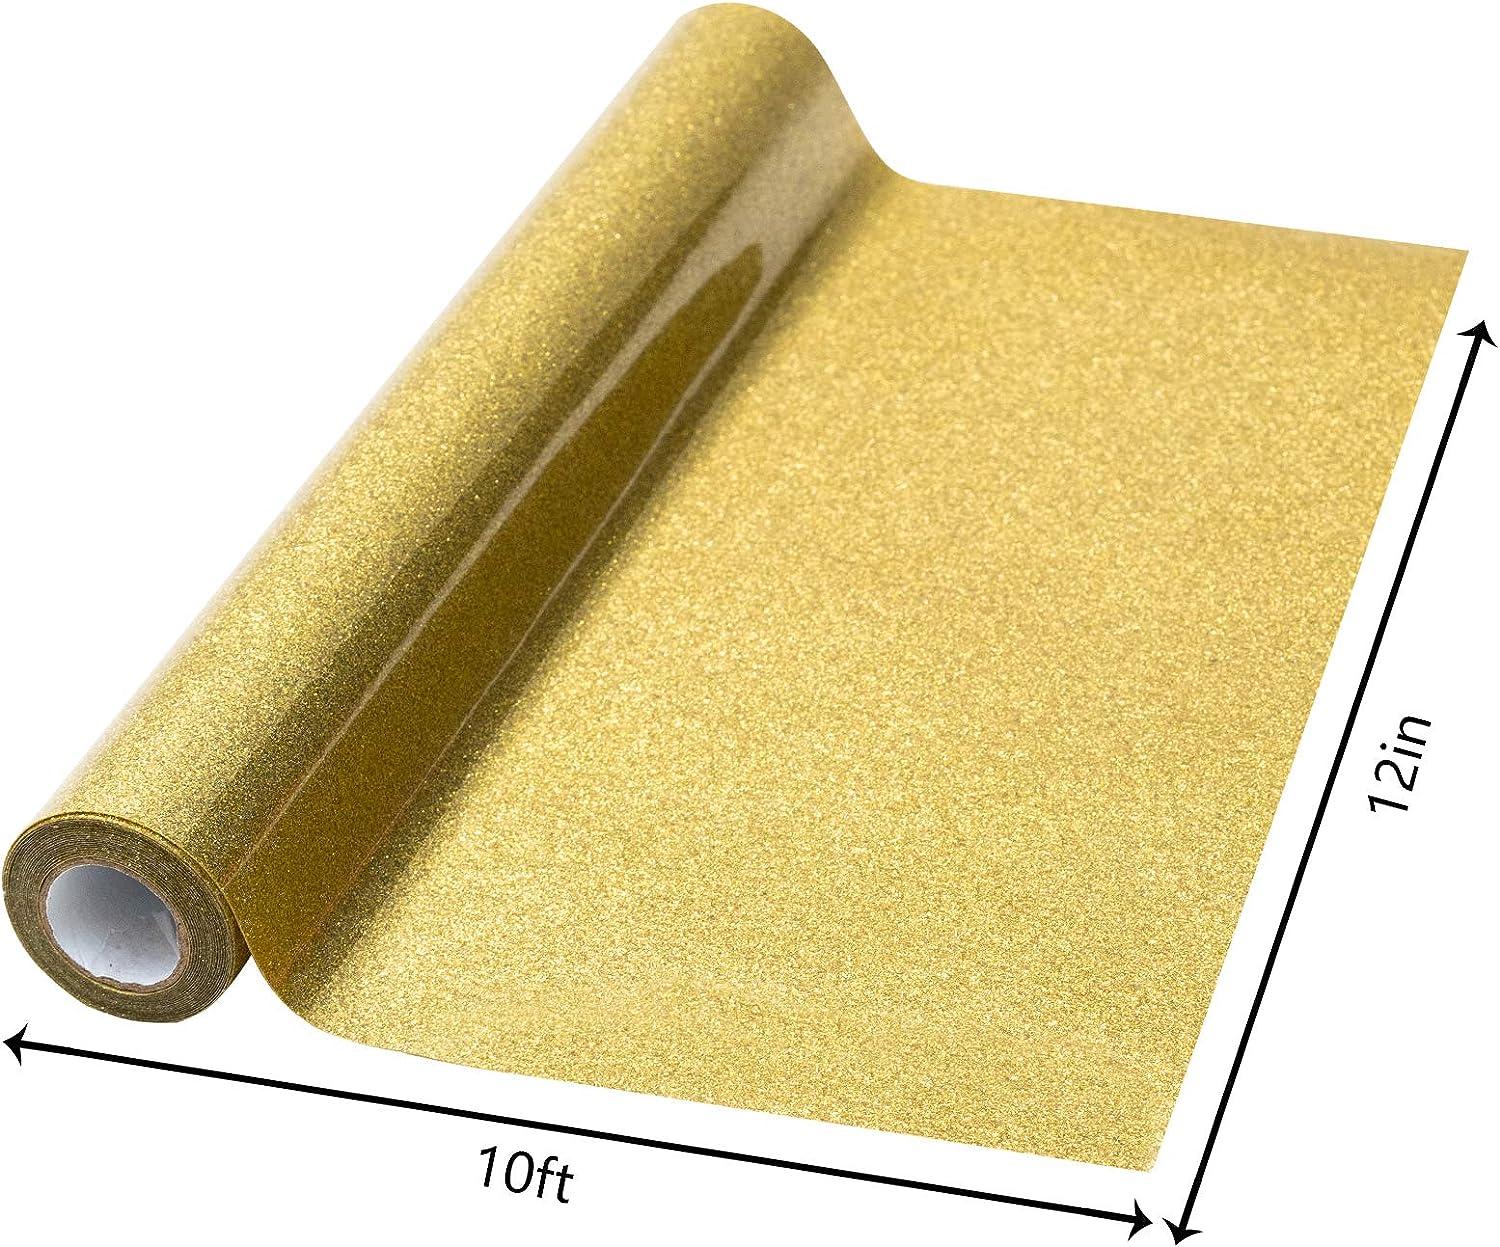 Gold Glitter HTV Heat Transfer Vinyl Roll - 12in x 10ft Iron on